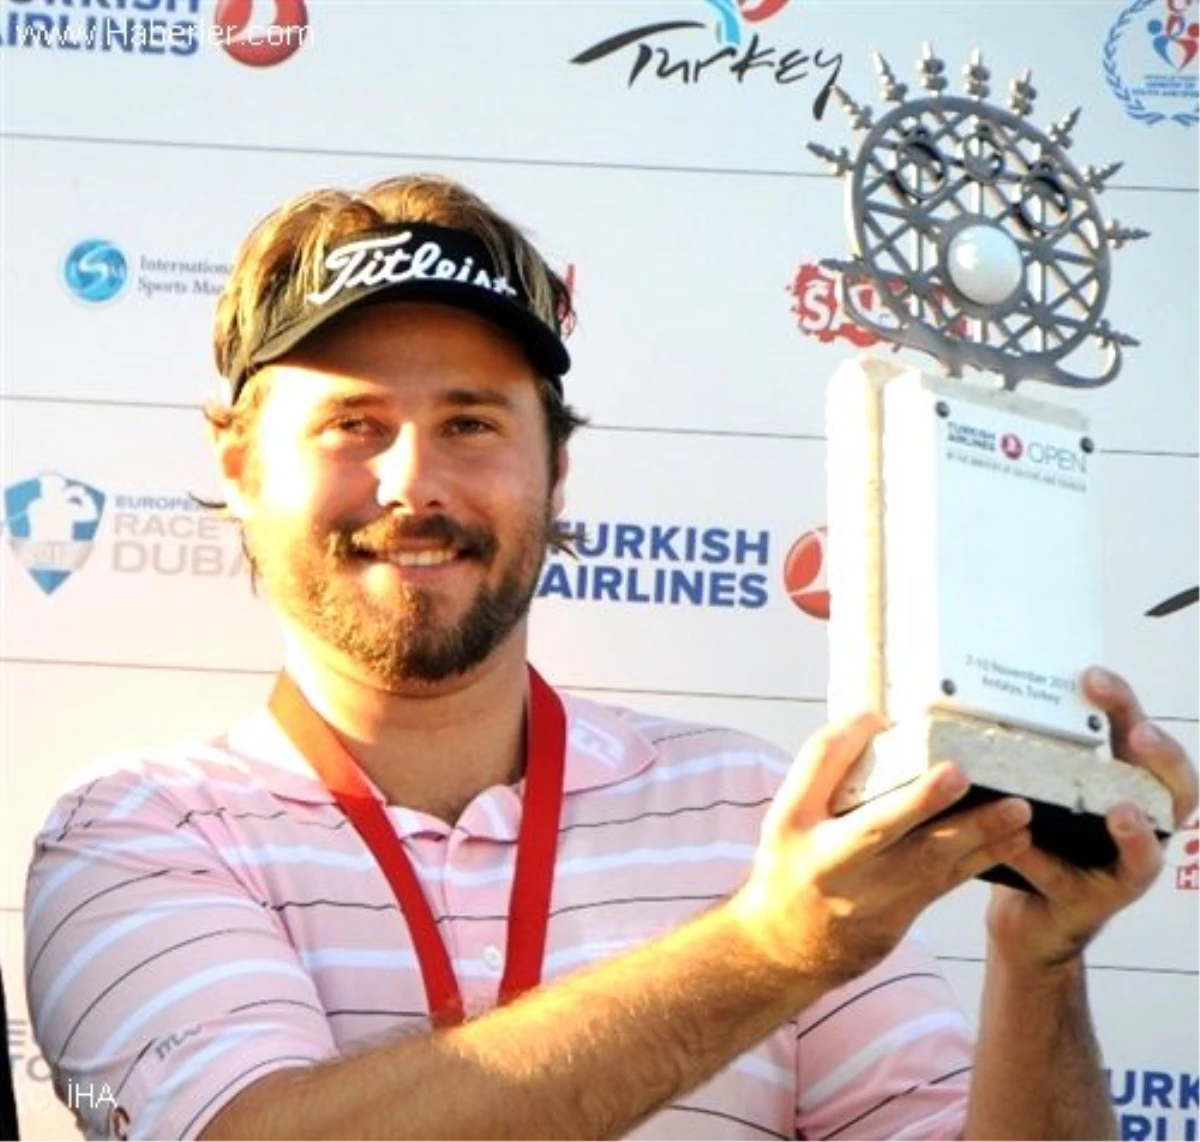 Turkish Airlines Open 2013 Golf Turnuvası\'nın Şampiyonu Fransız Dubuisson Oldu